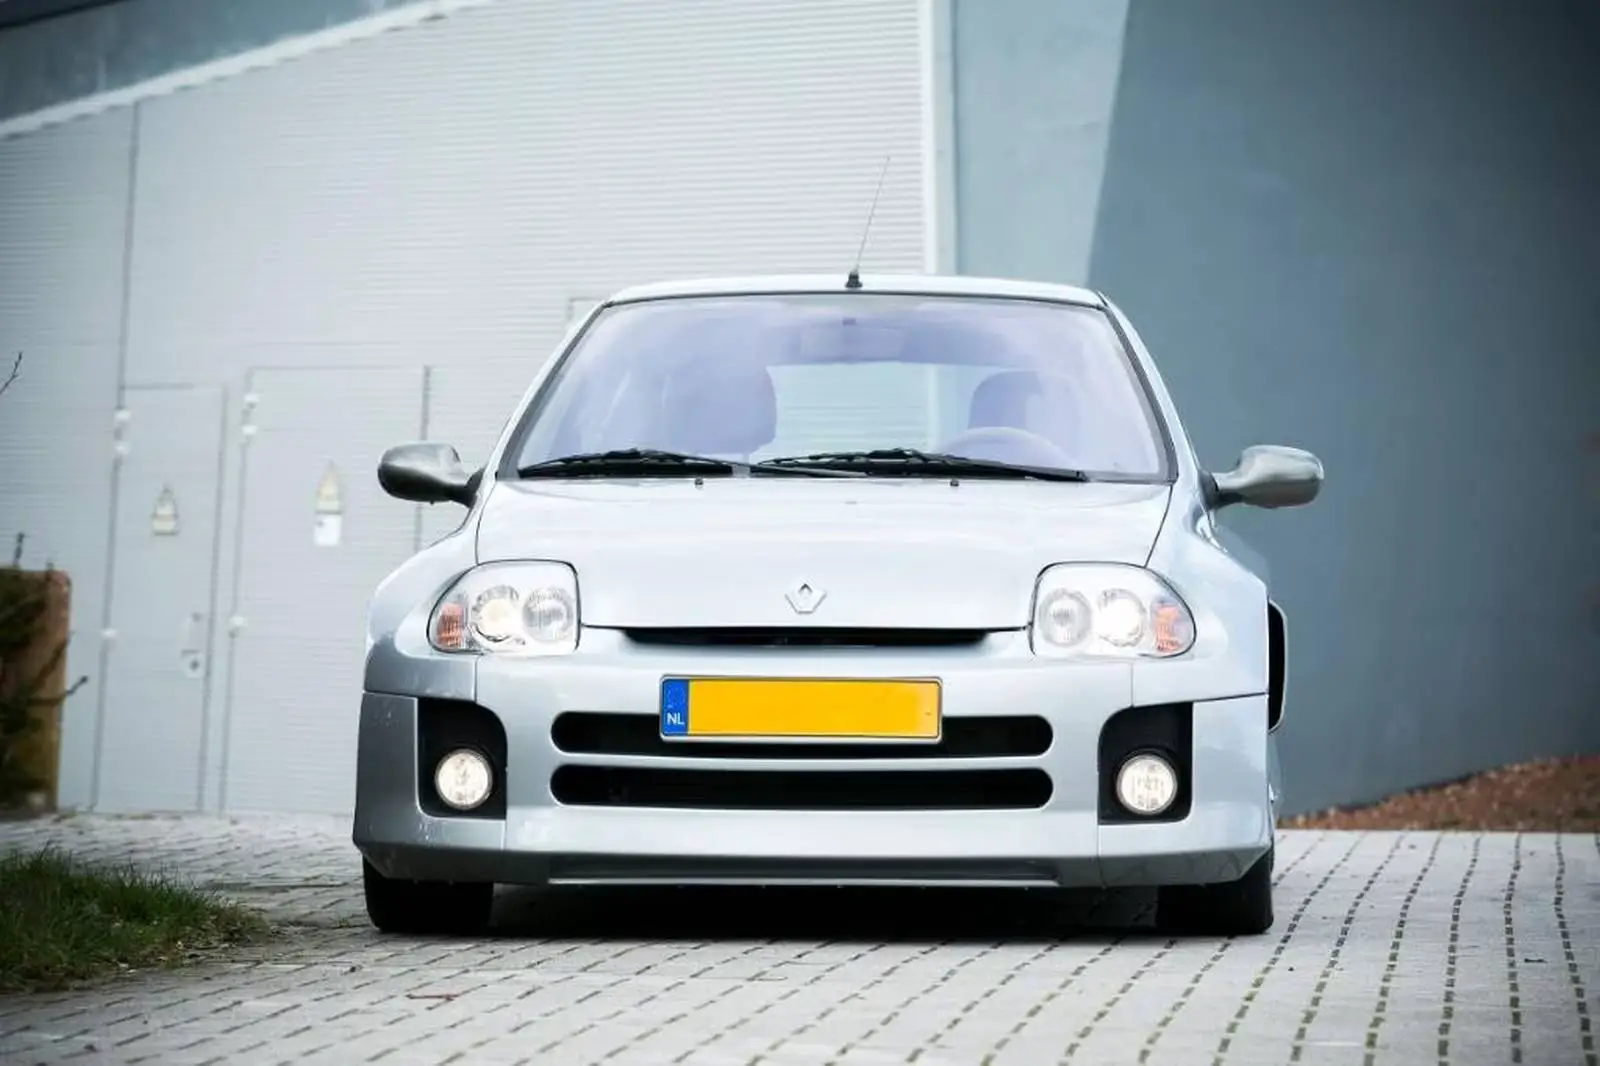 Daily driver Renault V6 te koop Gelderland (330.000 kilometer!) - All news